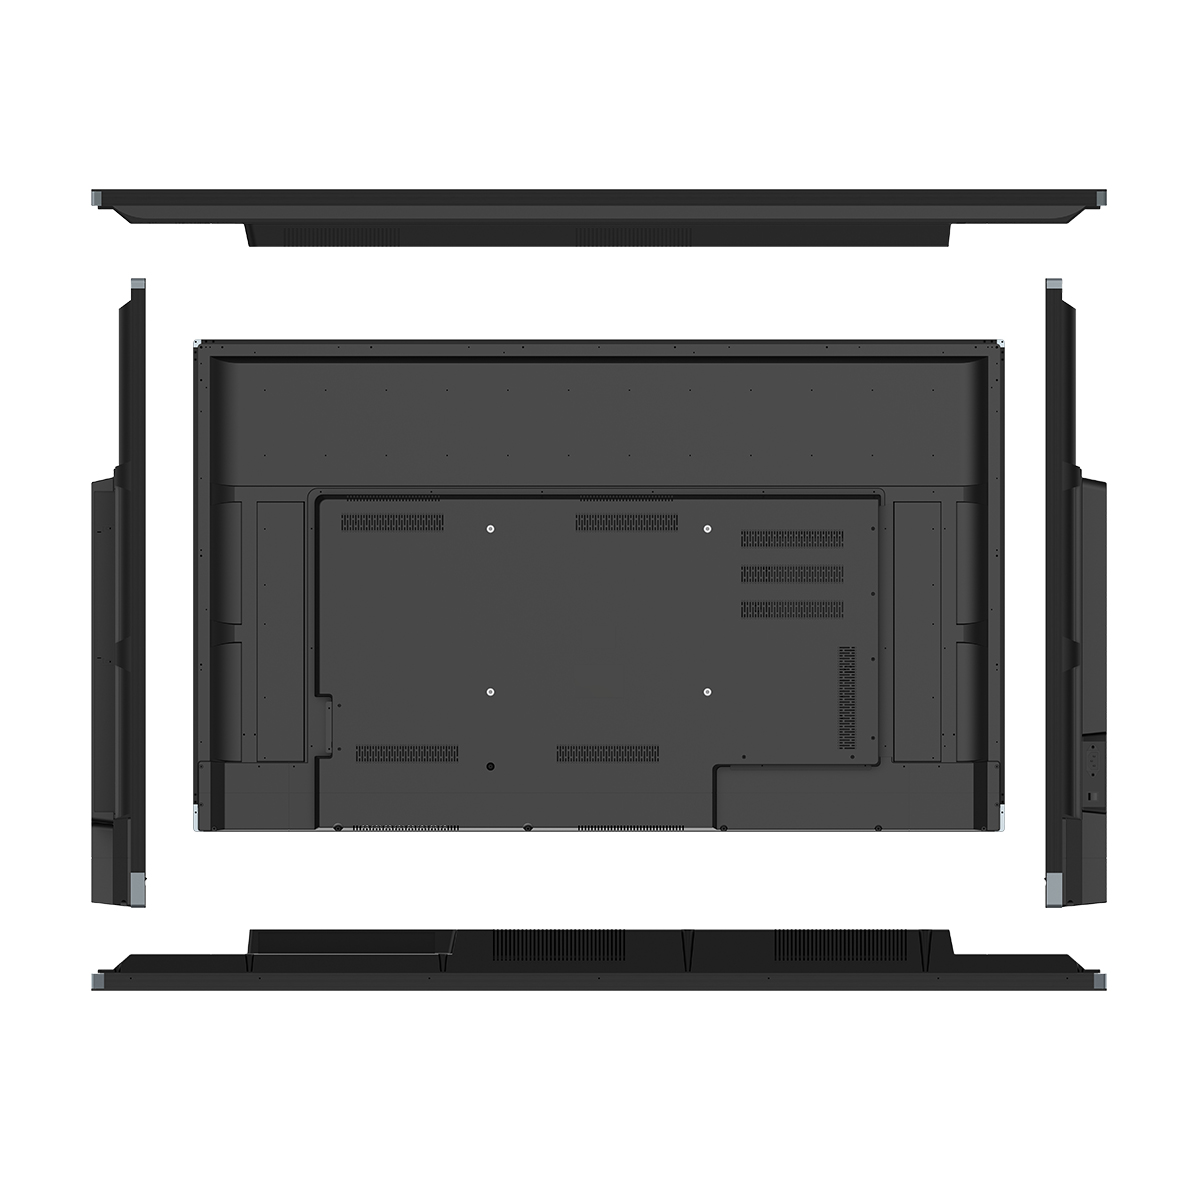 IDC-860DQ2-XZHV811 4+32G 4K UHD infrared writing touch whiteboard